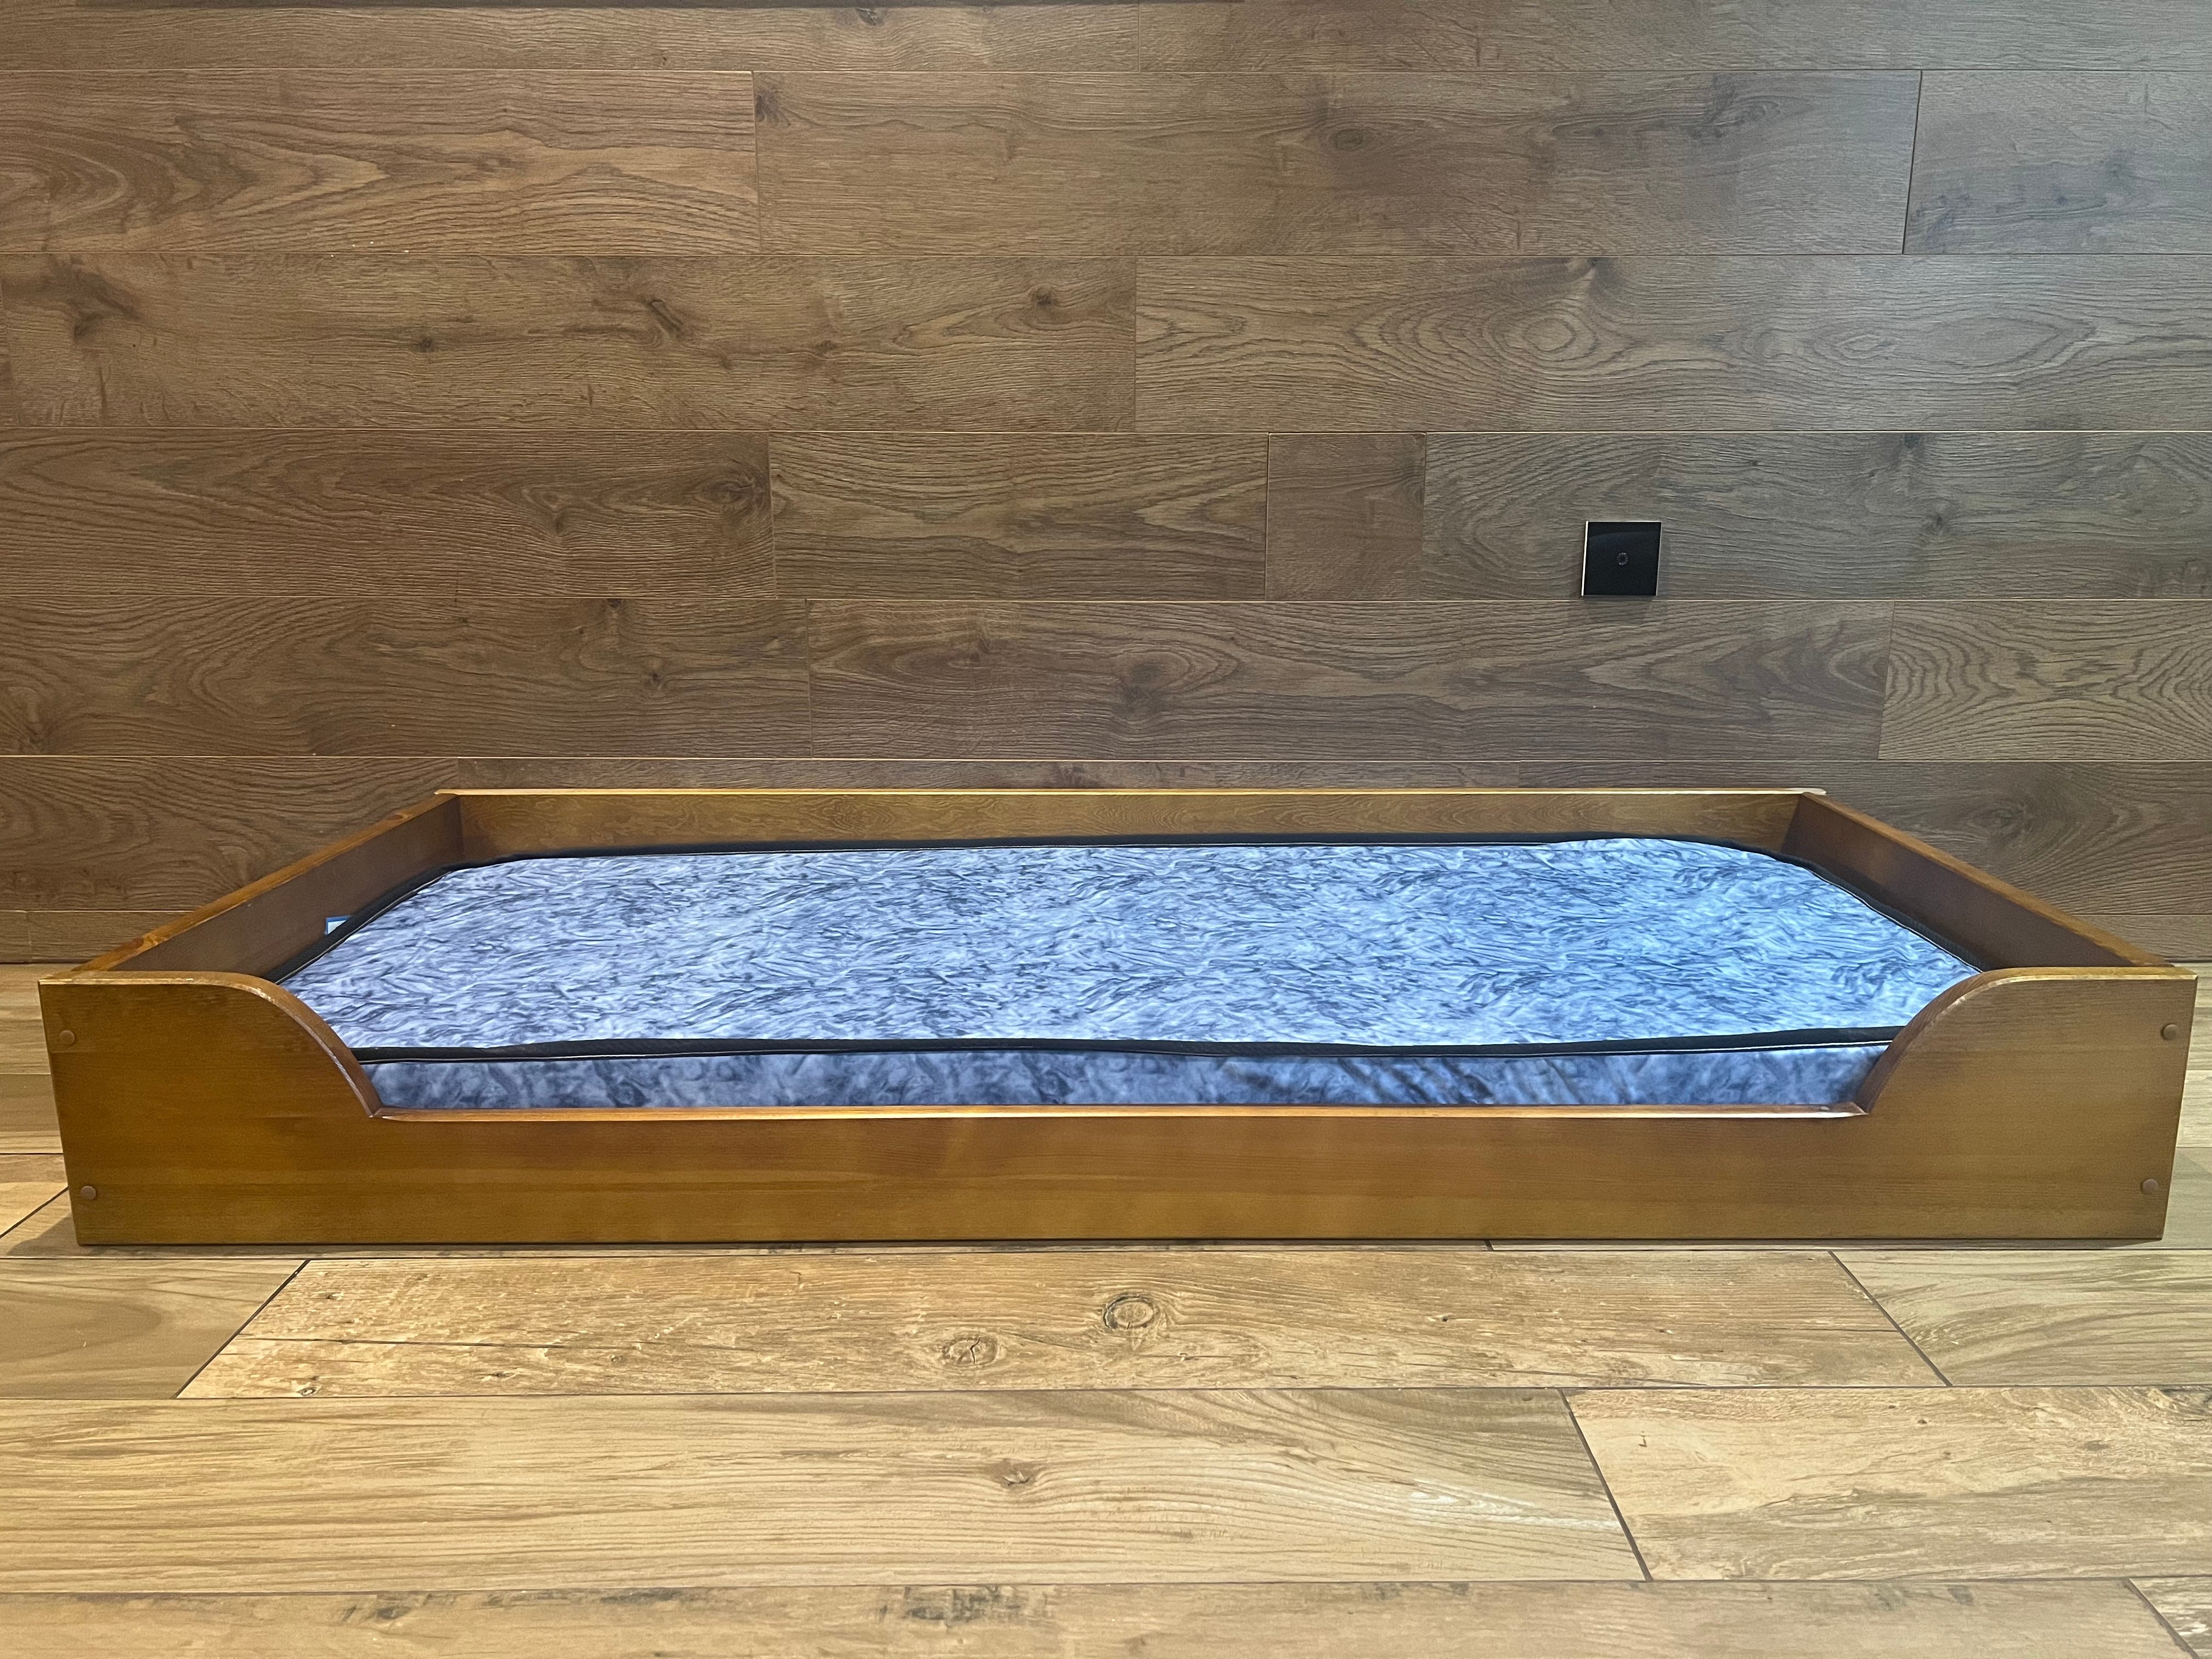 Wooden Bed Frame For Pets - Large